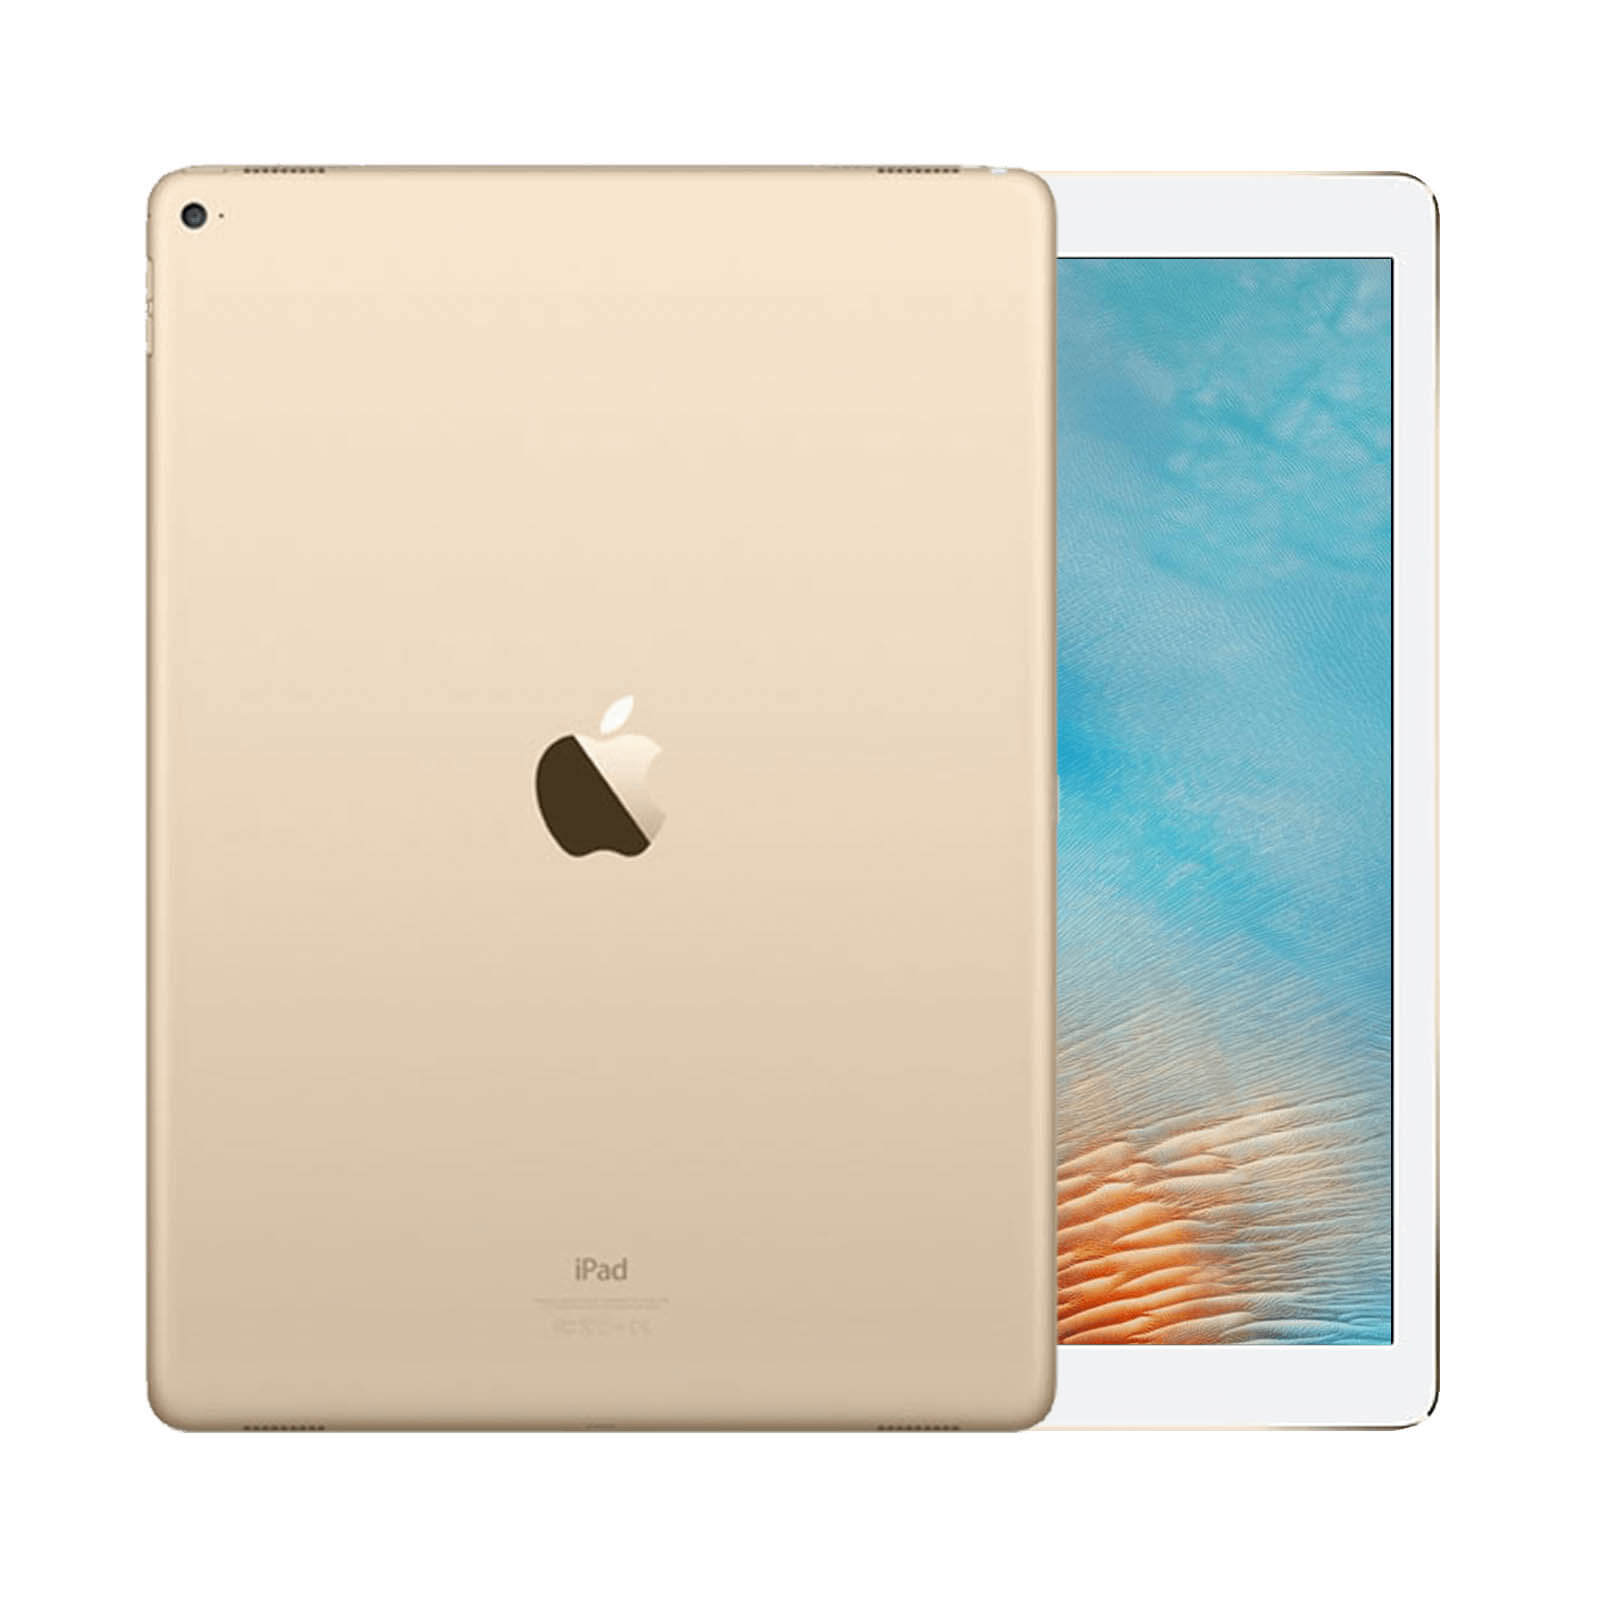 iPad Pro 12.9 Inch 2nd Gen 64GB Gold Very Good - WiFi